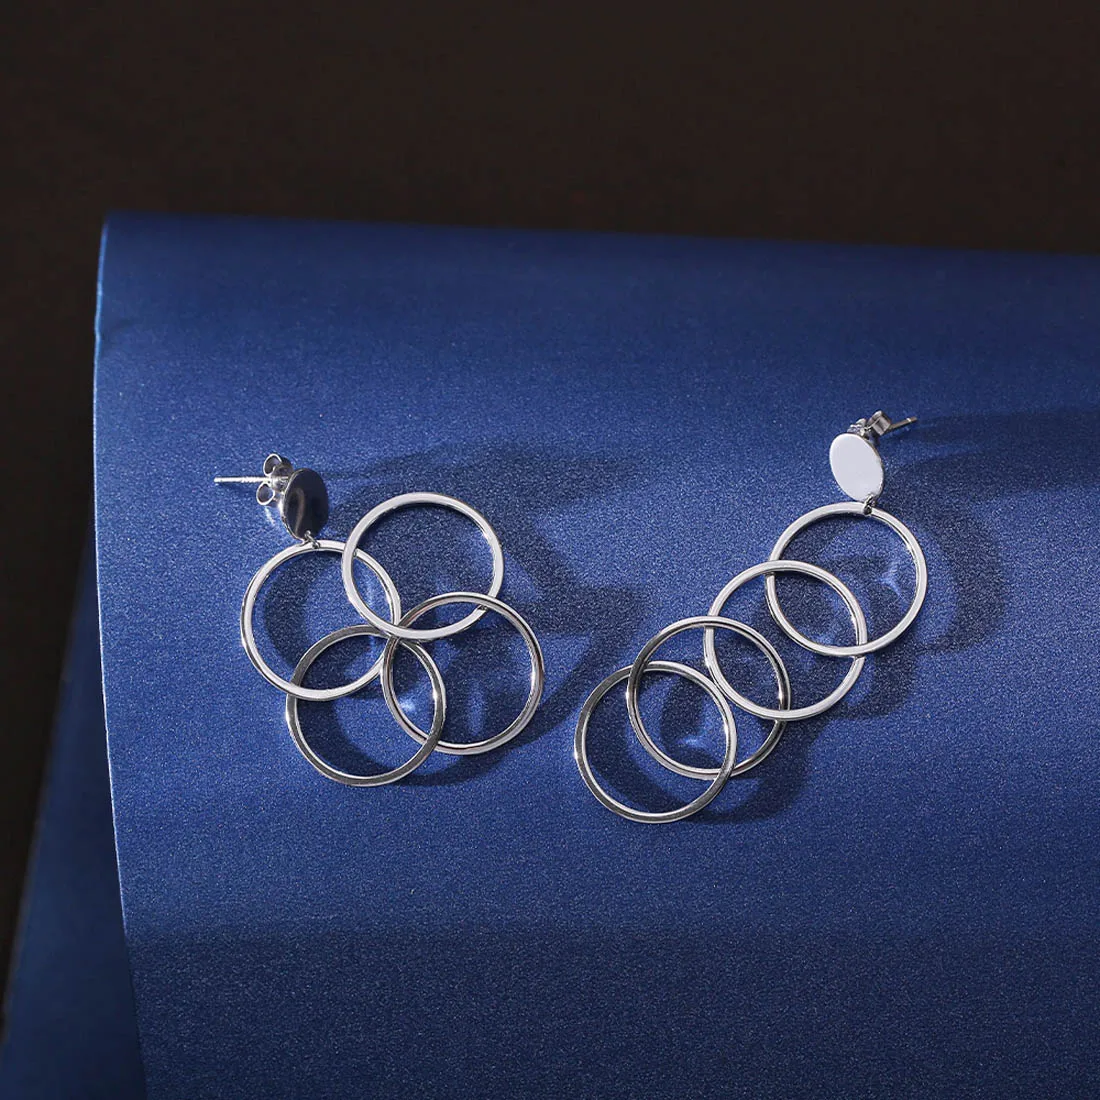 SA SILVERAGE 925 пробы серебро круглой формы серьги для Для женщин дизайнер 925 пробы серебряные круглые серьги Мода